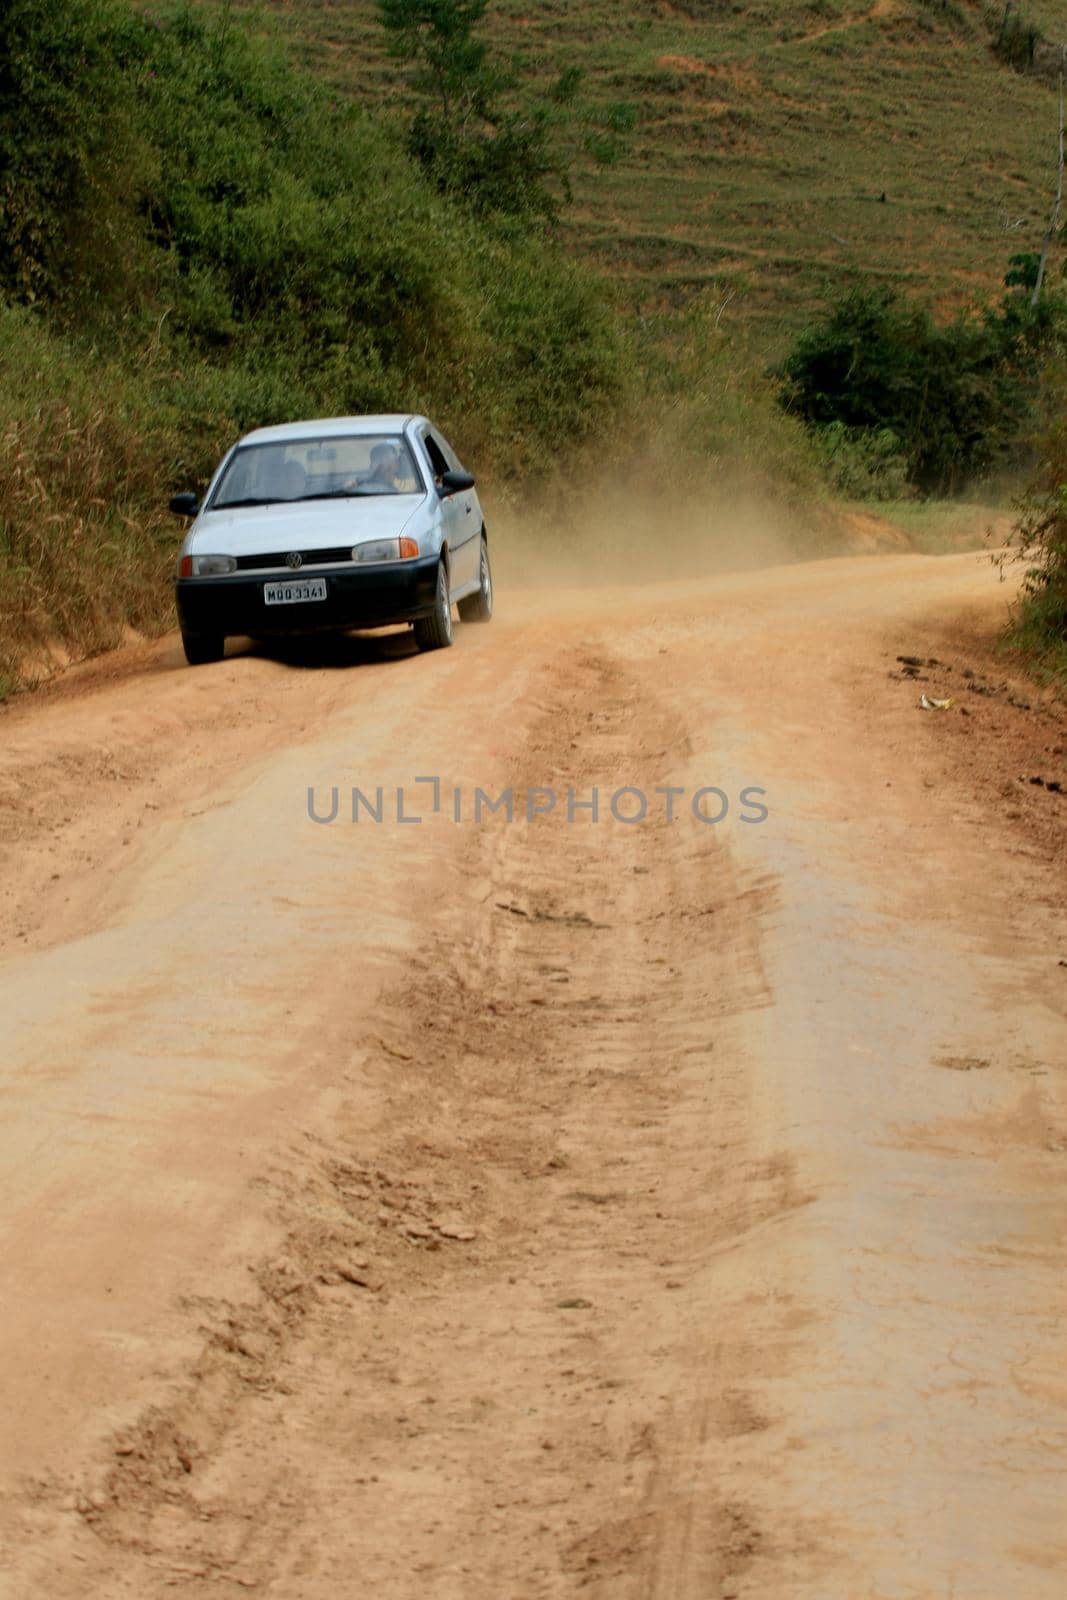 itamaraju, bahia / brazil - august 6, 2008: vehicle travels on a dirt road that connects the municipalities of Itamaraju to Jucurocu in southern Bahia.




